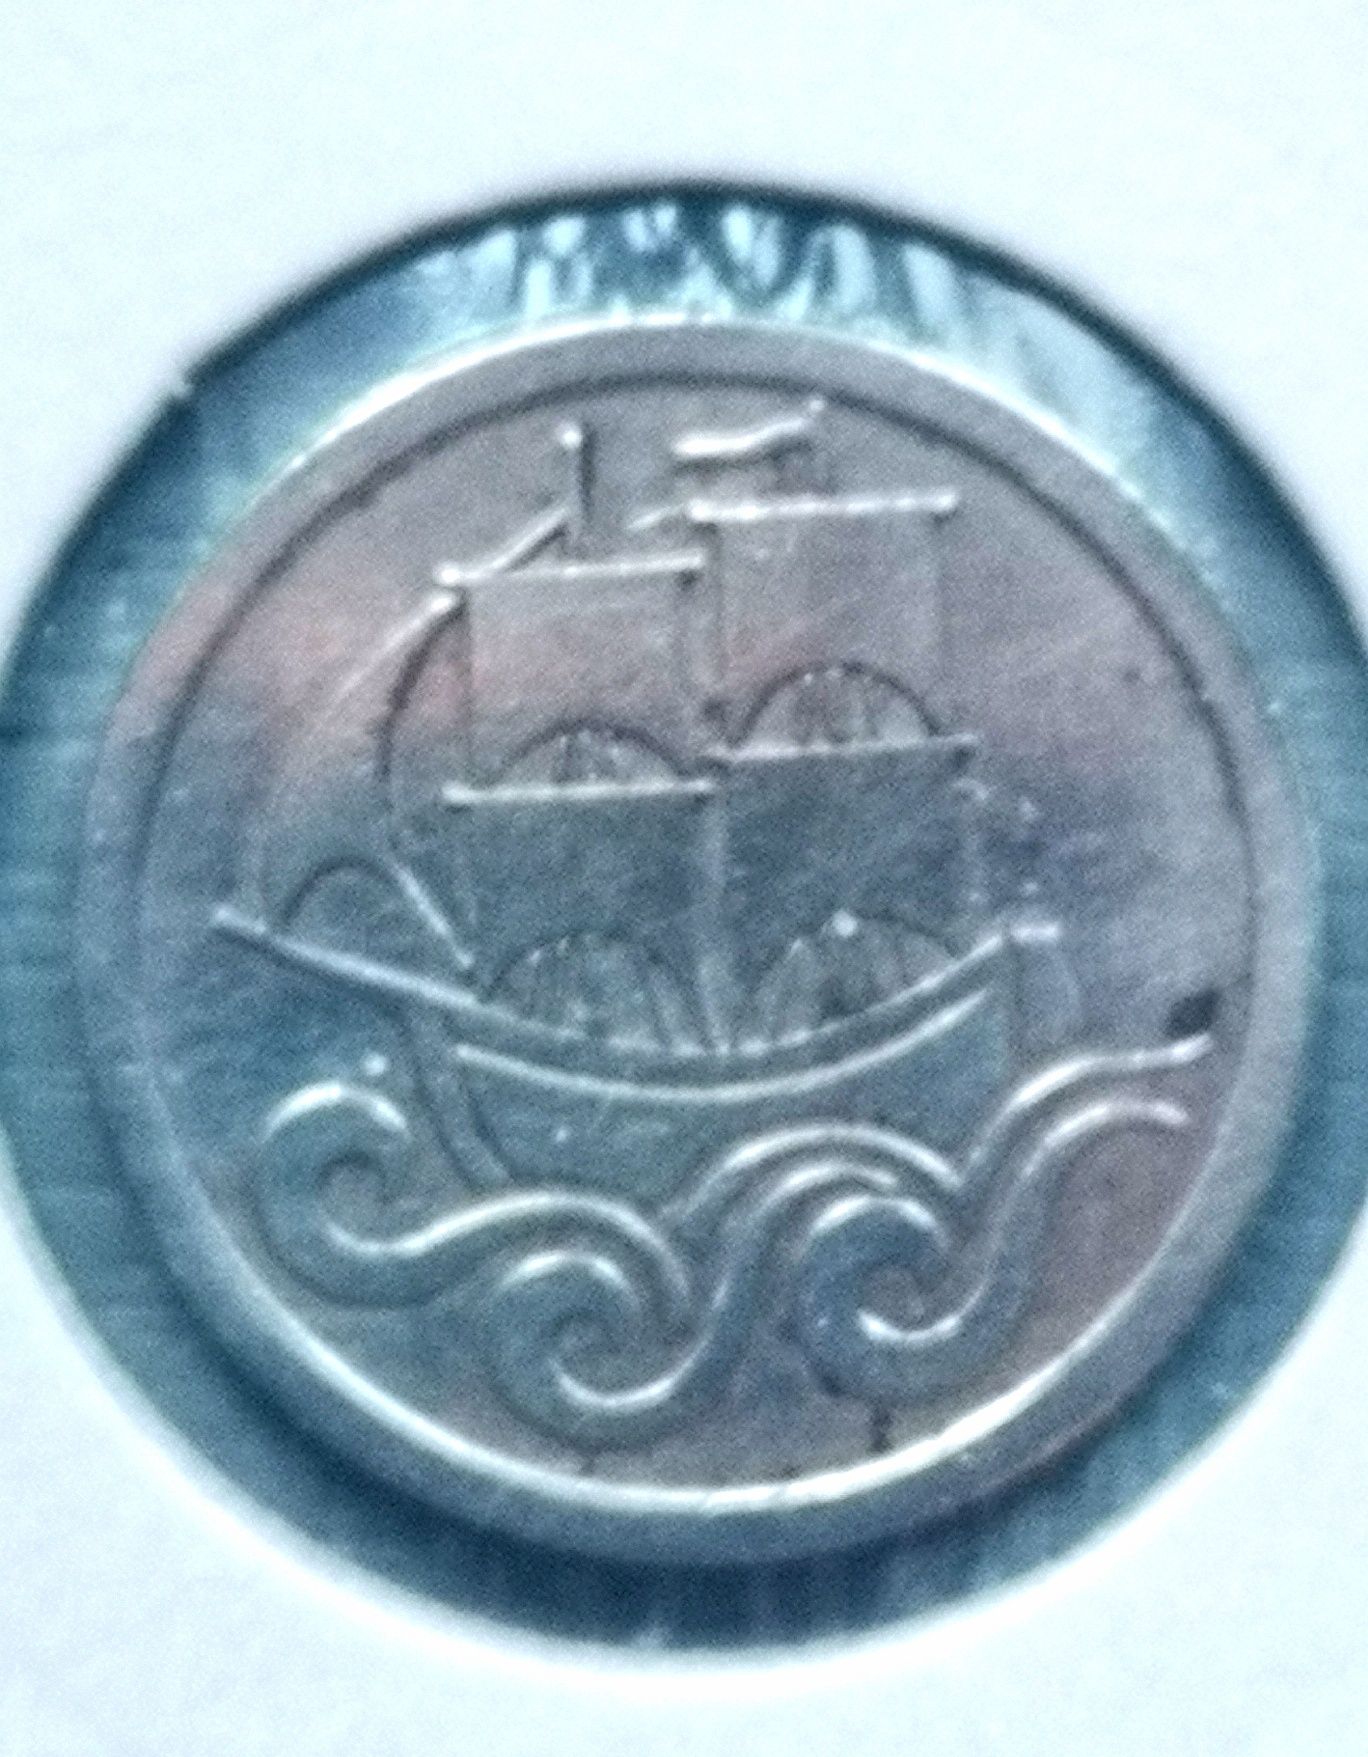 Moneta WMG 1/2 Gulden 1923r